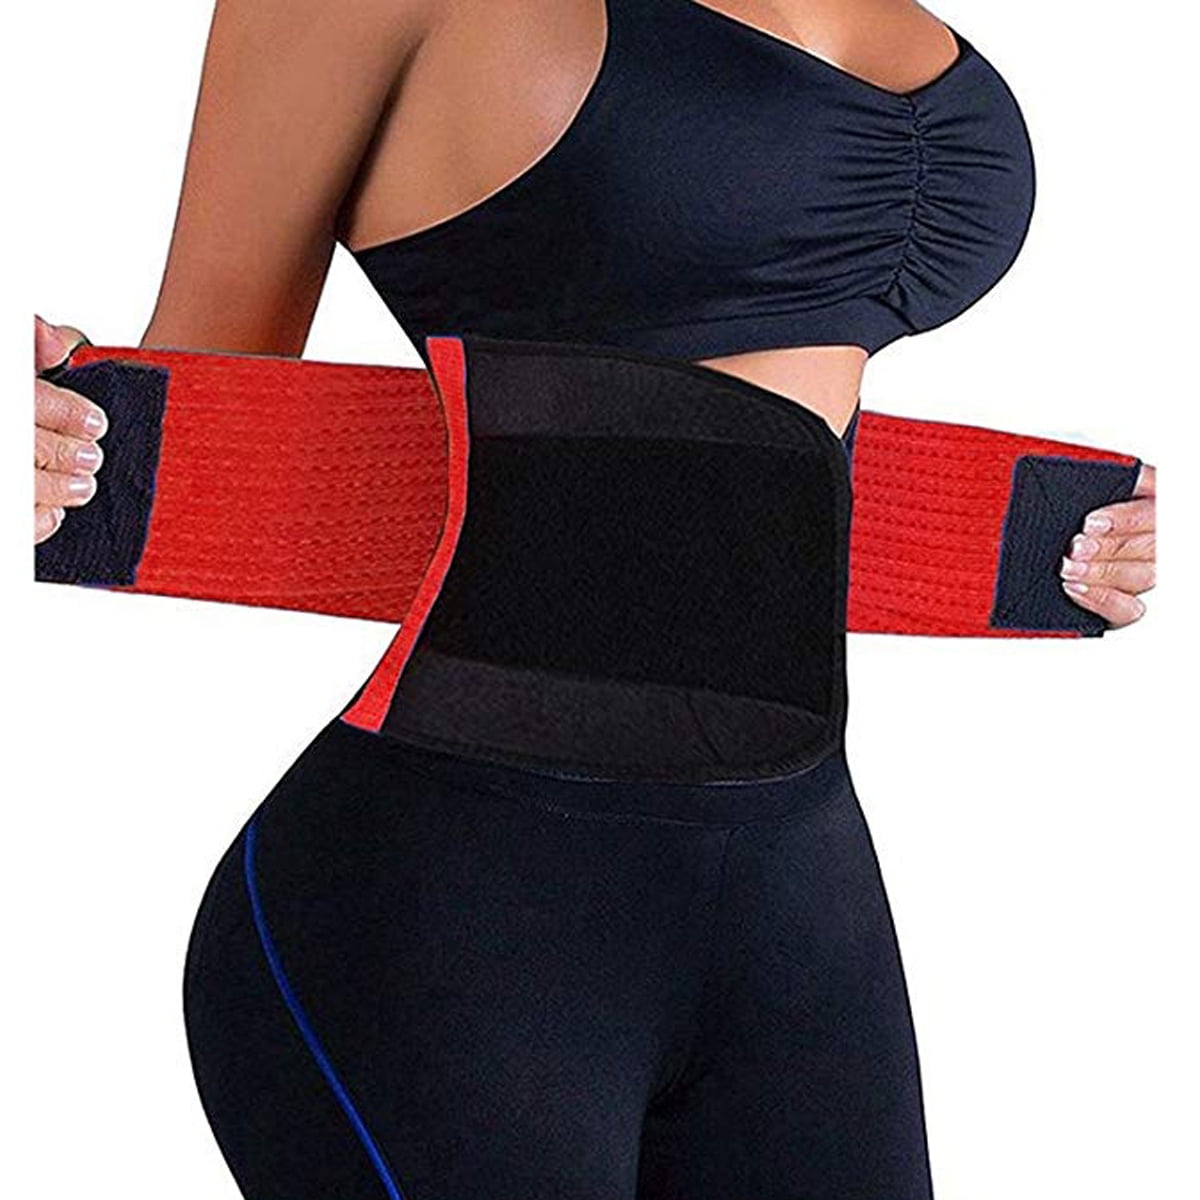 Sport Girdle Belt EraseSIZE Women Waist Trainer Belt Body Shaper Belly Wrap Trimmer Slimmer Compression Band Weight Loss Workout Fitness 